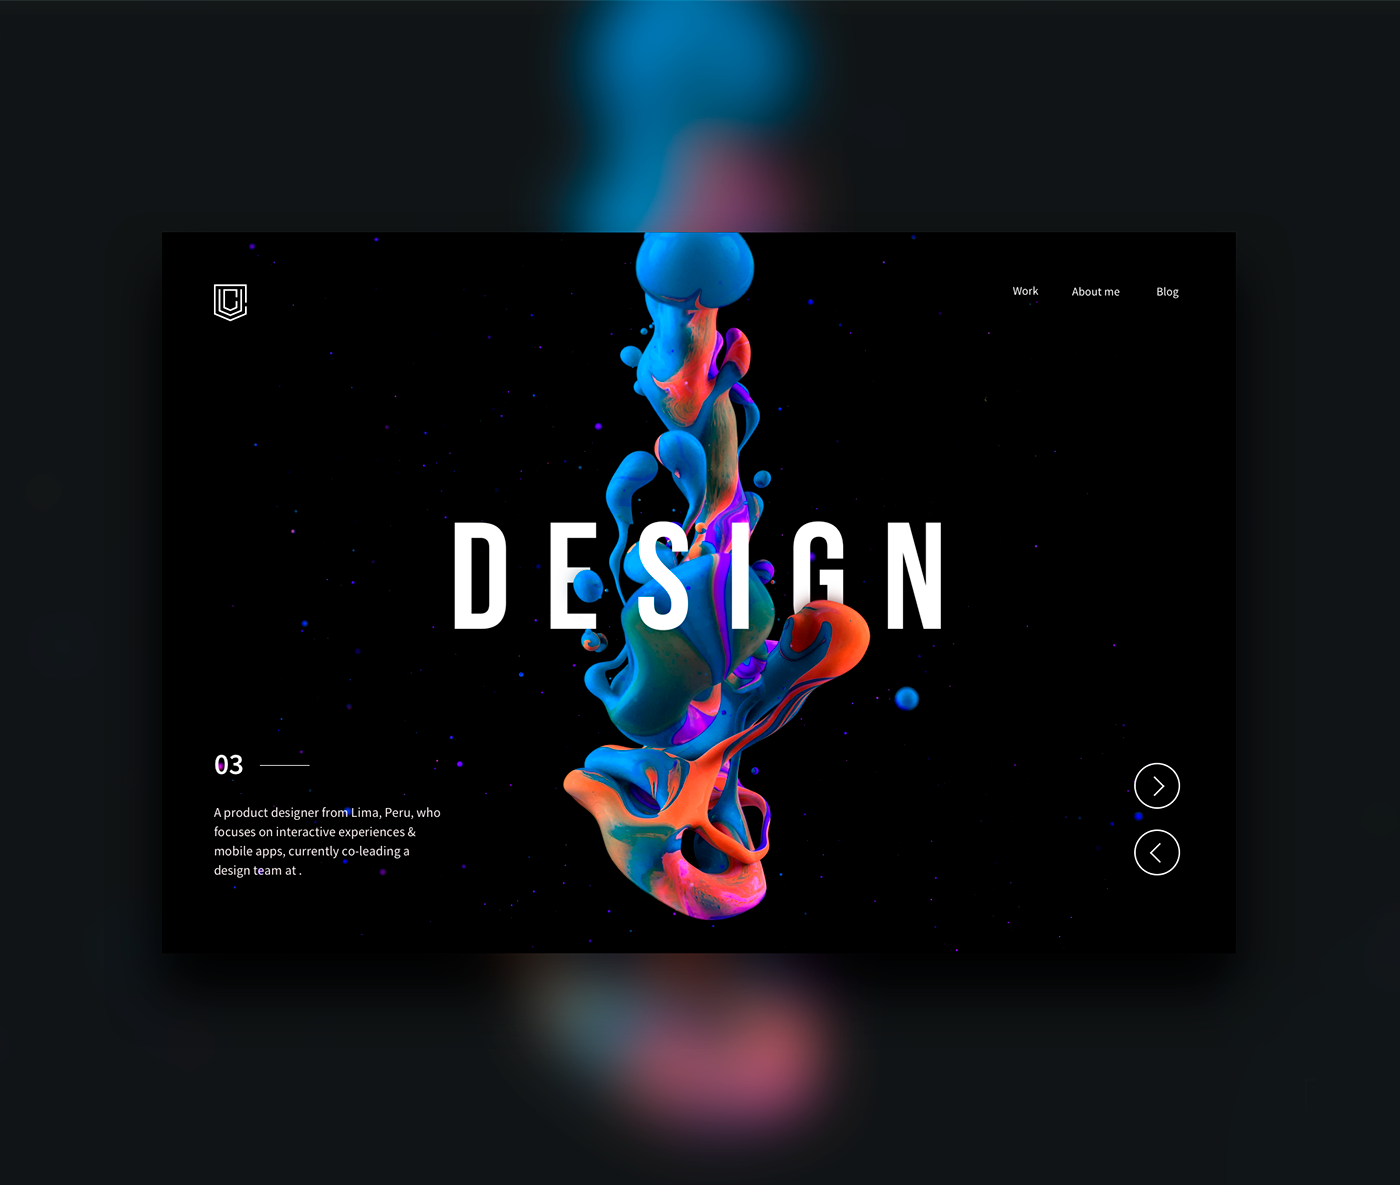 ux UI user experience app mobile design app interface design user interface Interaction design  minimalist visual design